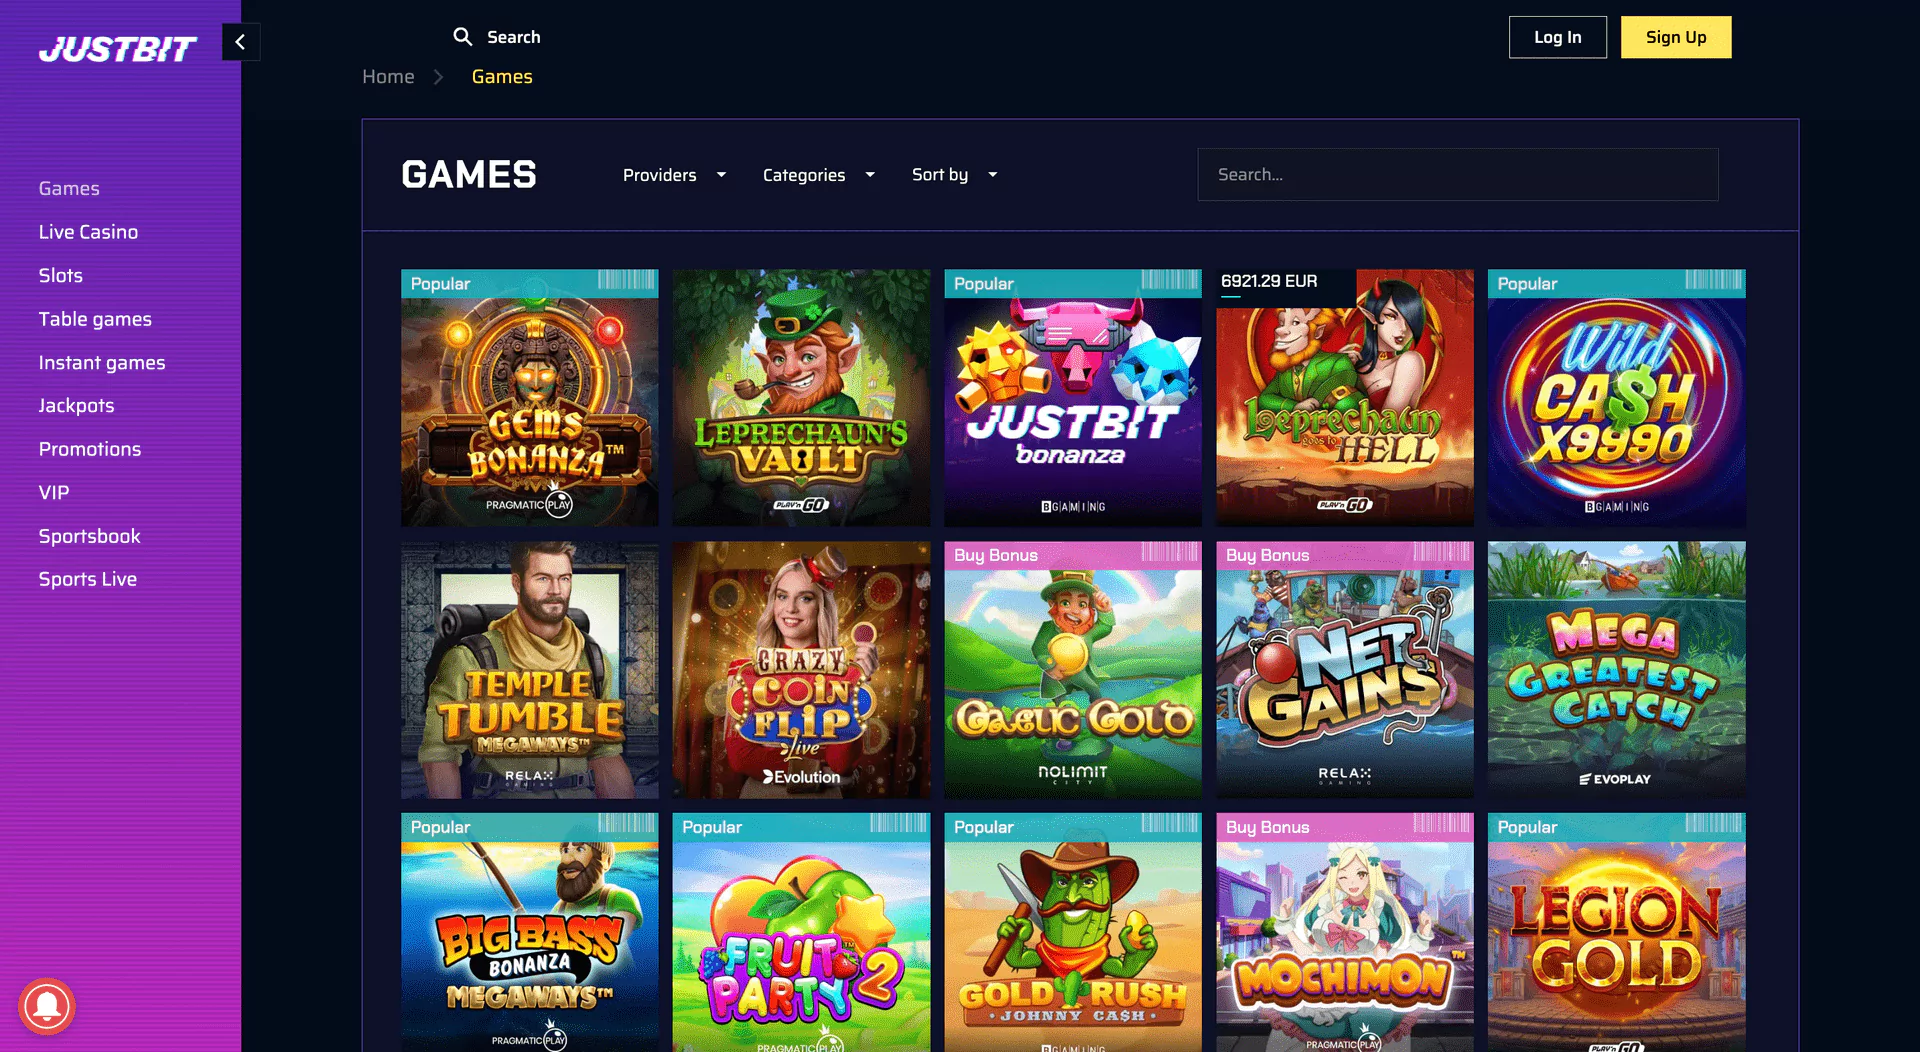 Games at JustBit casino